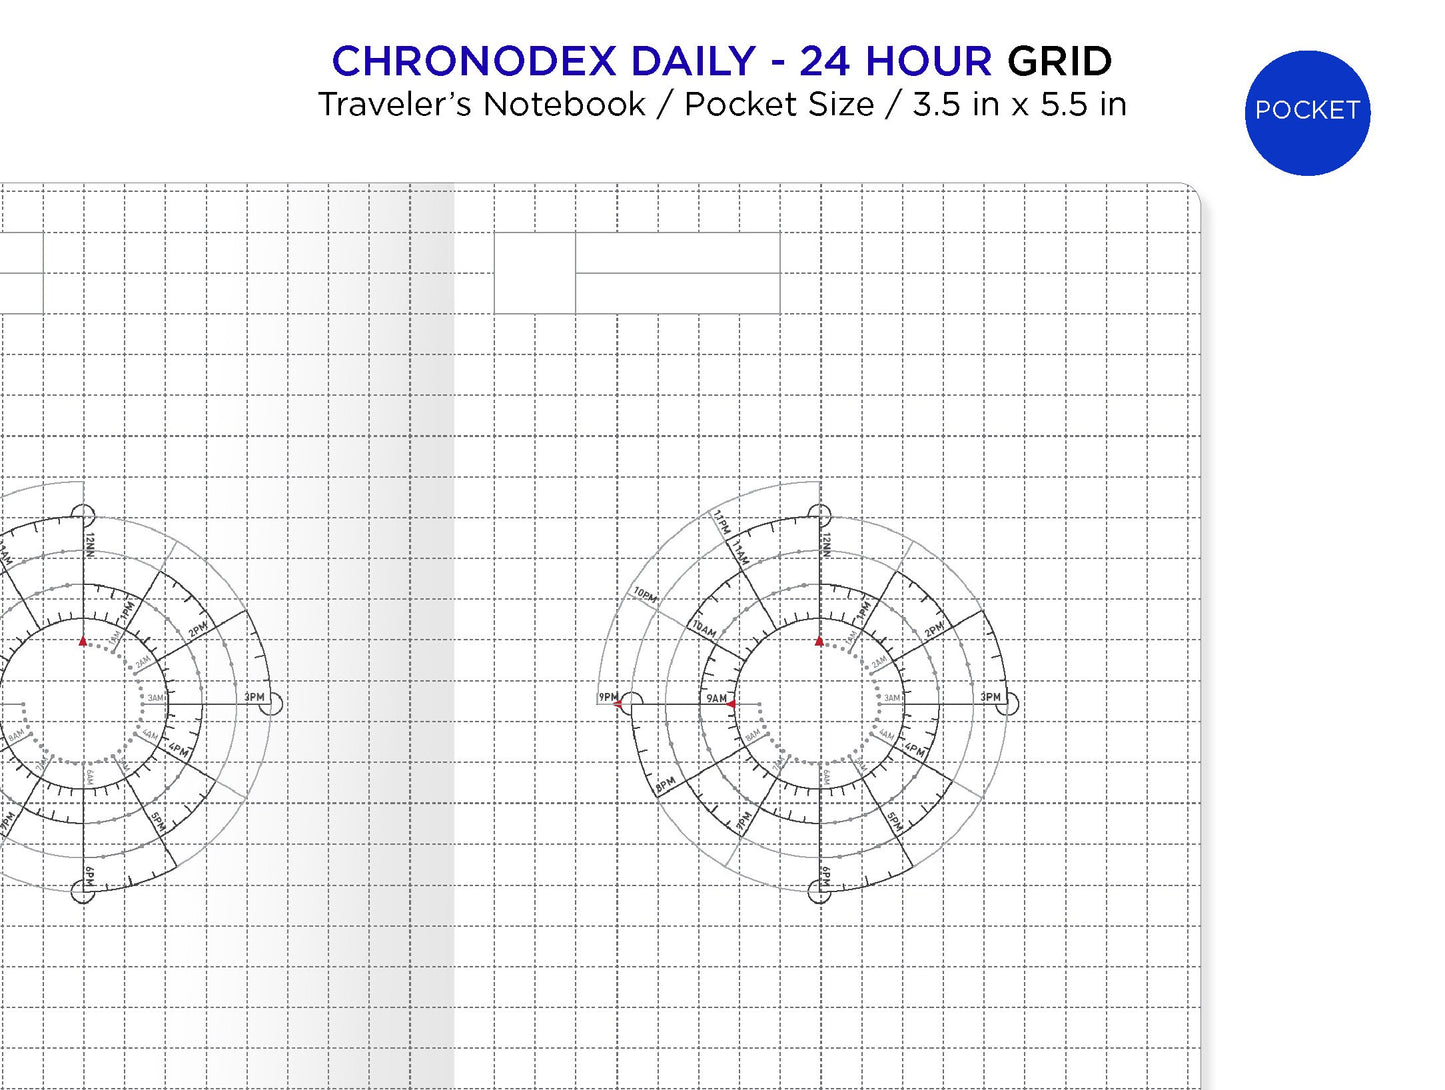 CHRONODEX Pocket DAILY Traveler's Notebook Printable Insert GRID Do1P - Minimalist